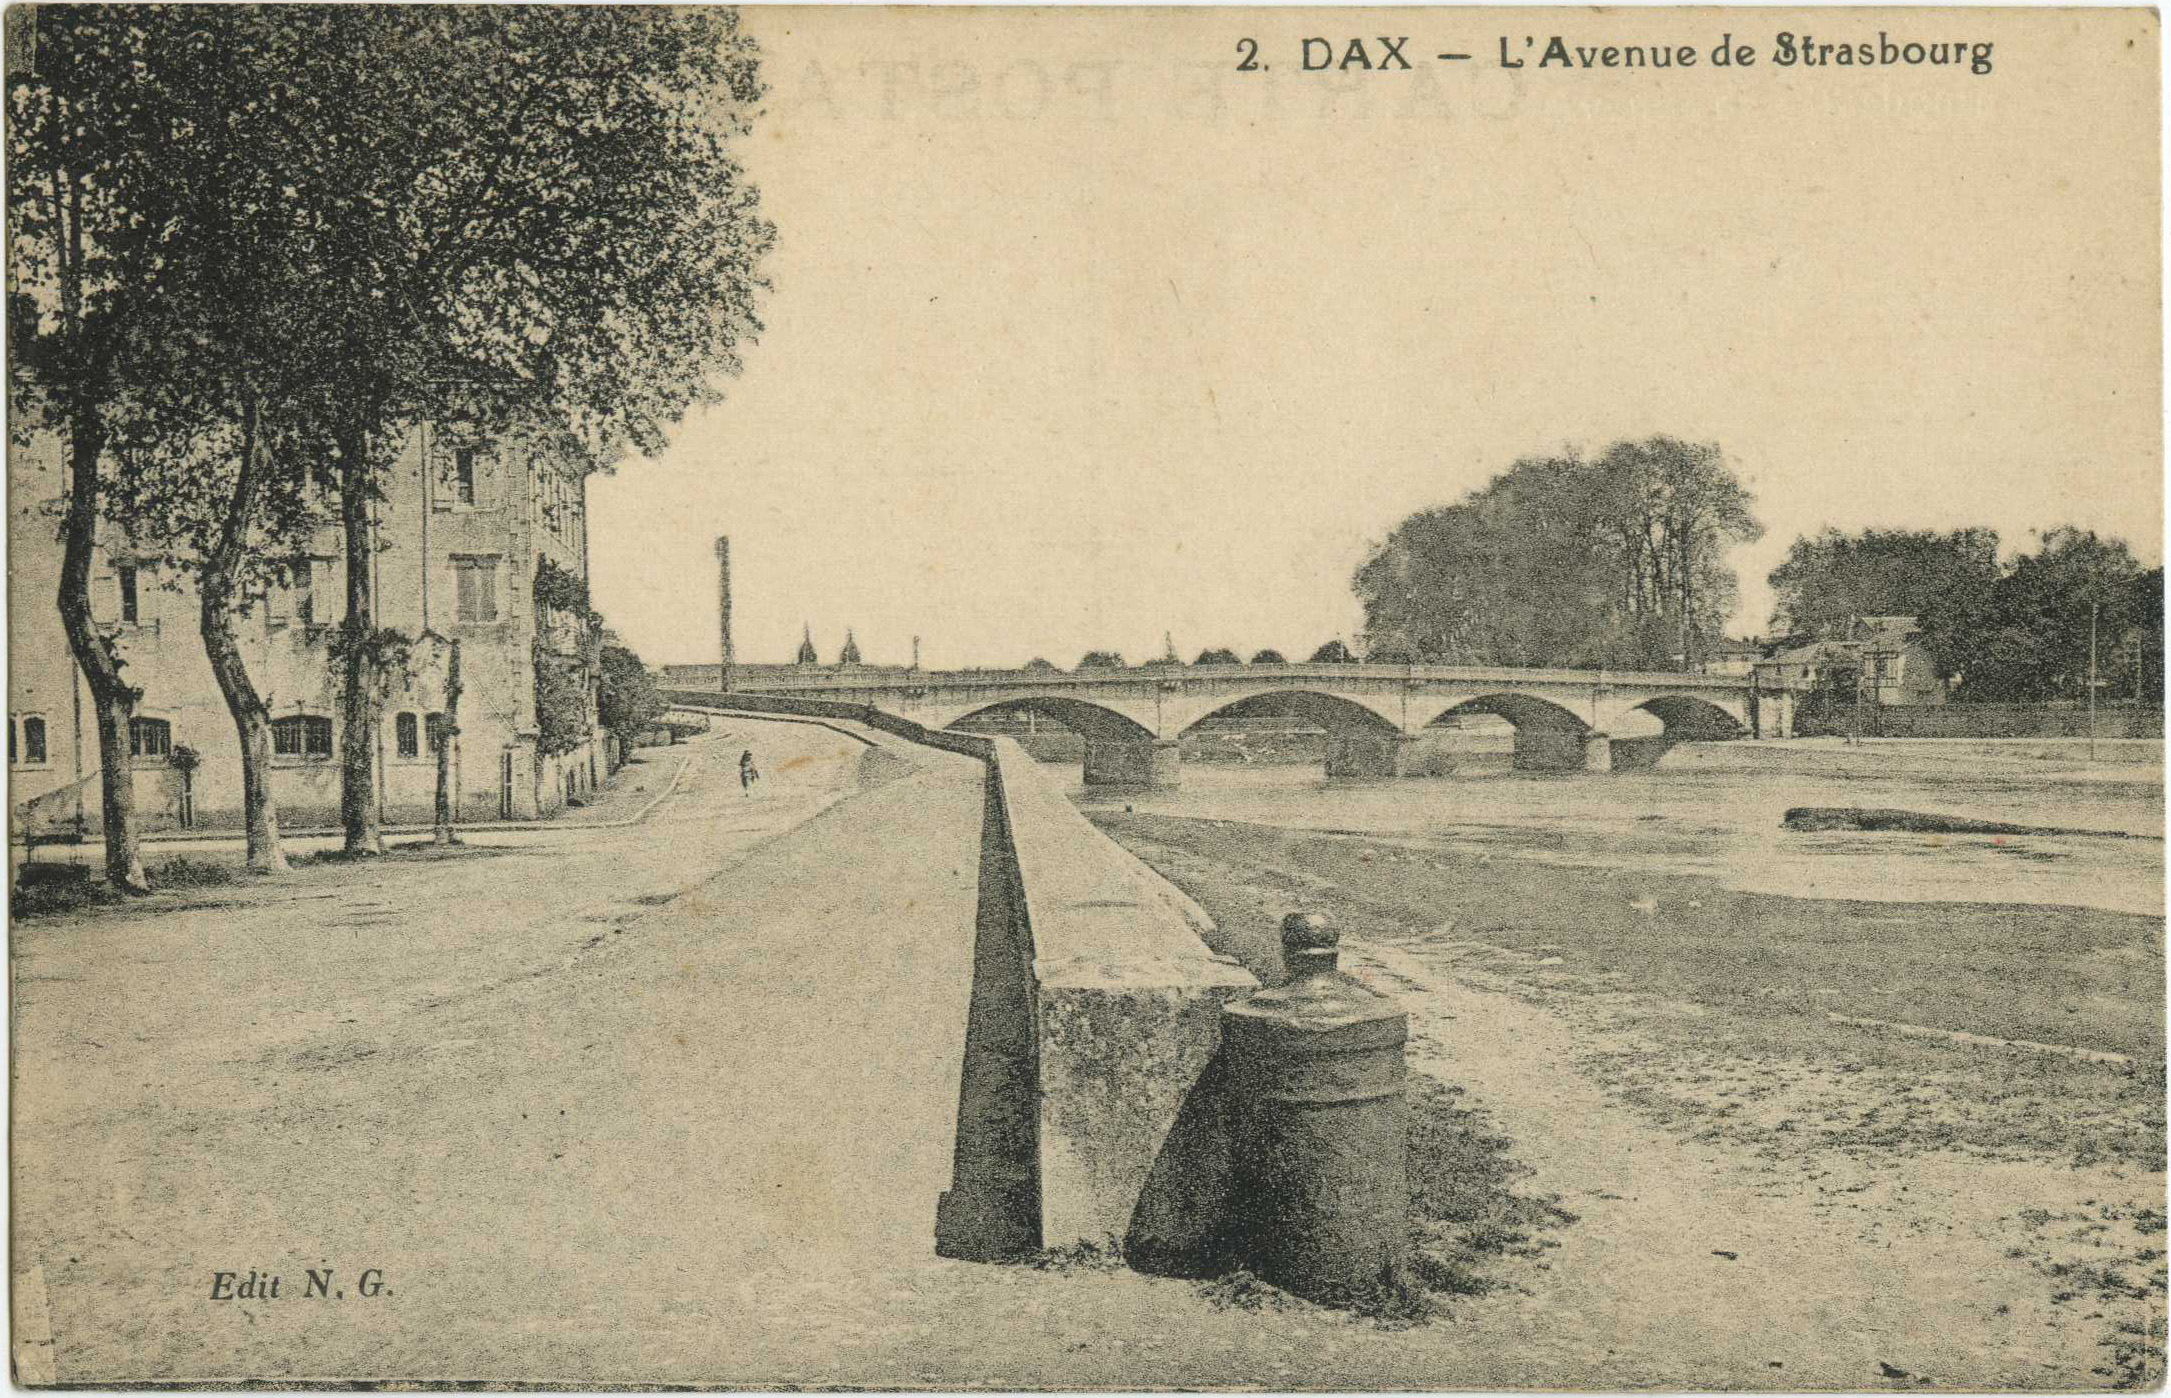 Dax - L'Avenue de Strasbourg